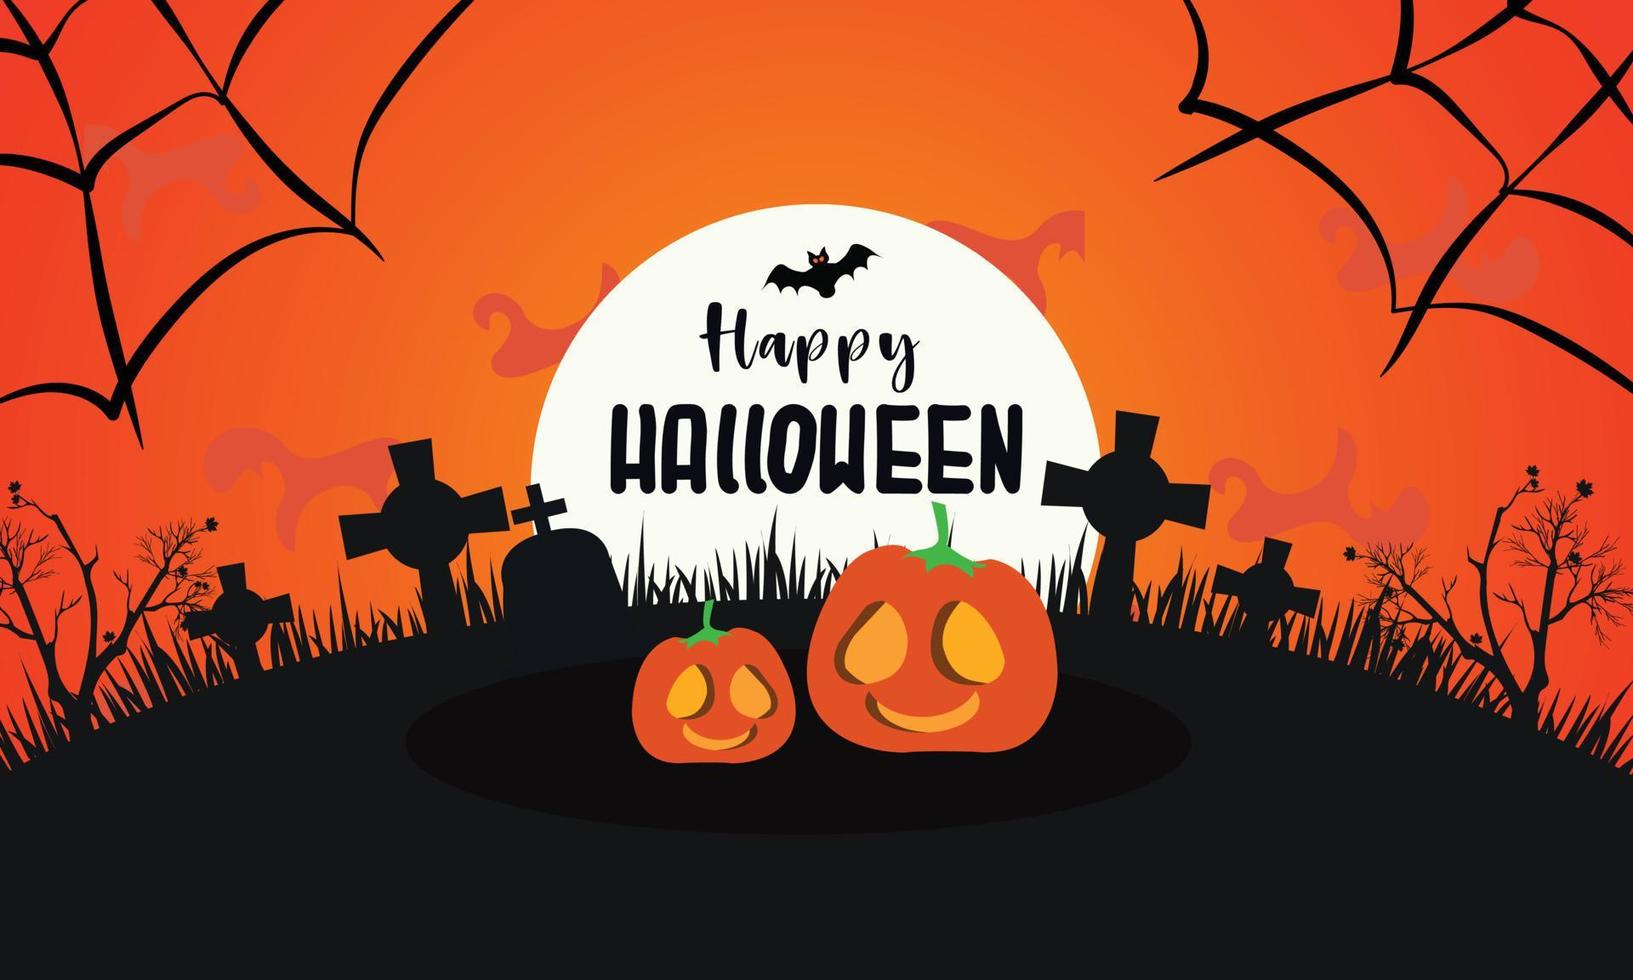 Happy Halloween with a horror pumpkin flat design vector